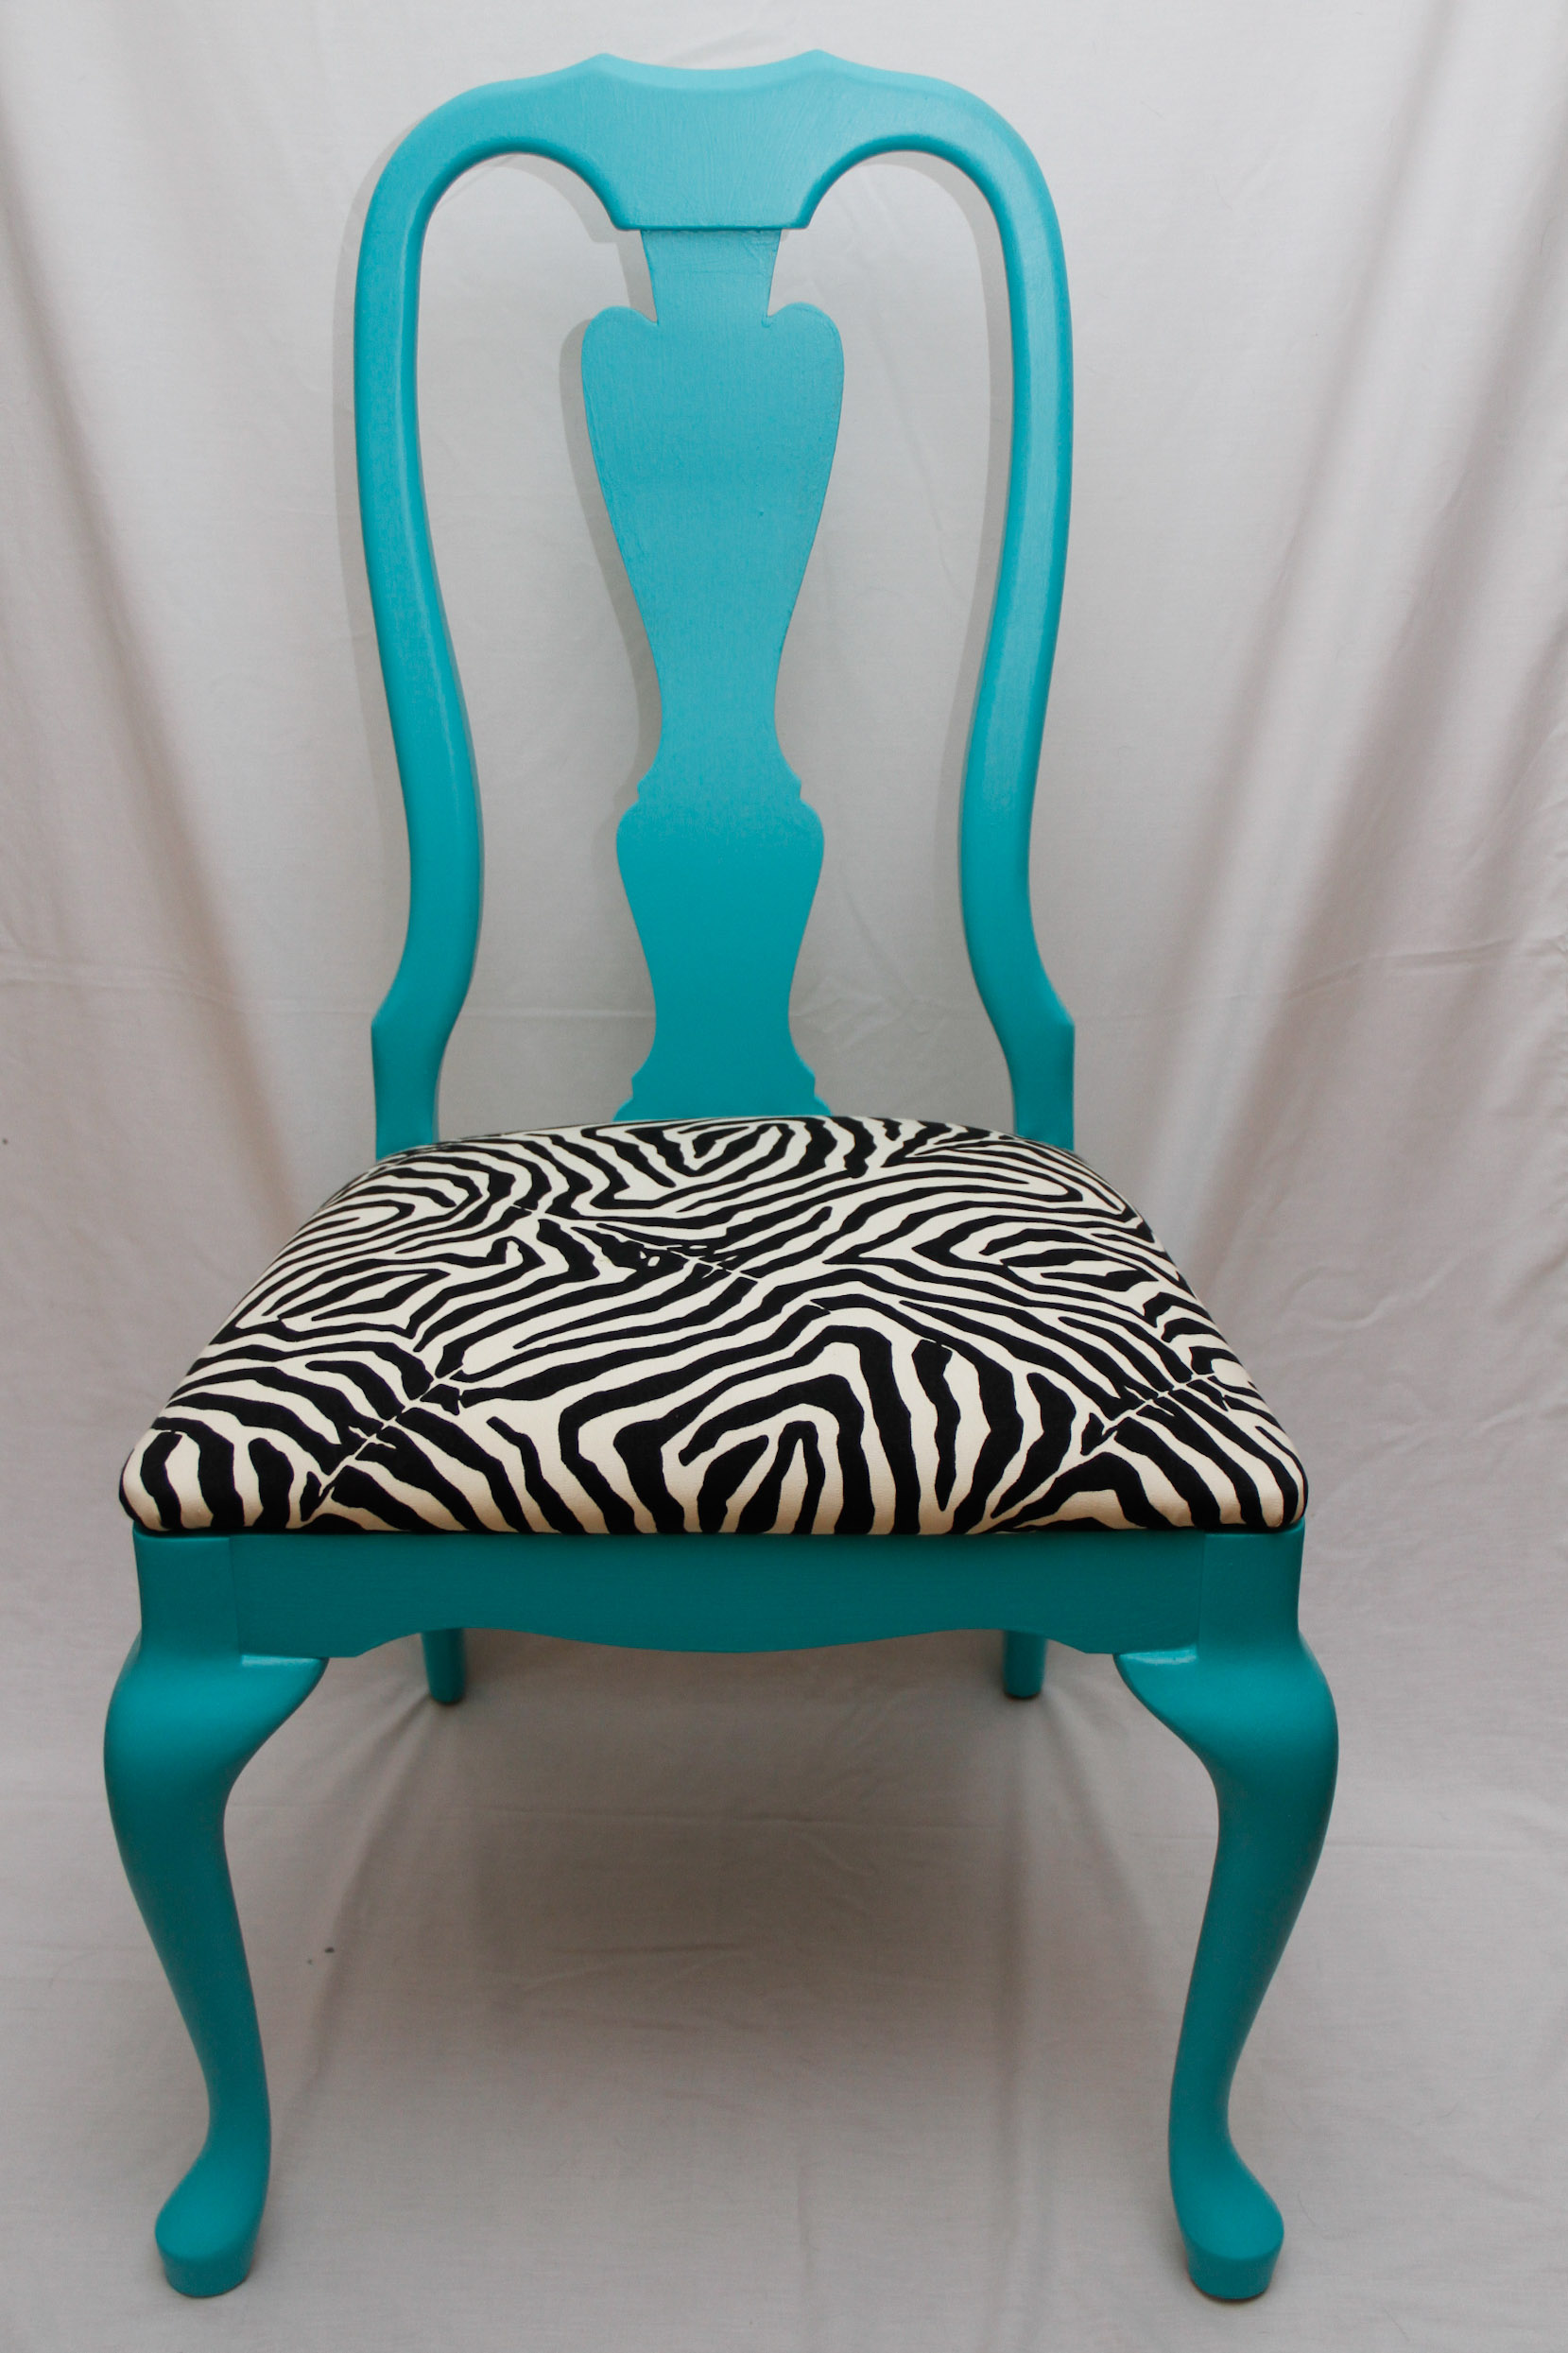 Zebra and Teal Chair | Lori Wilson's Blog